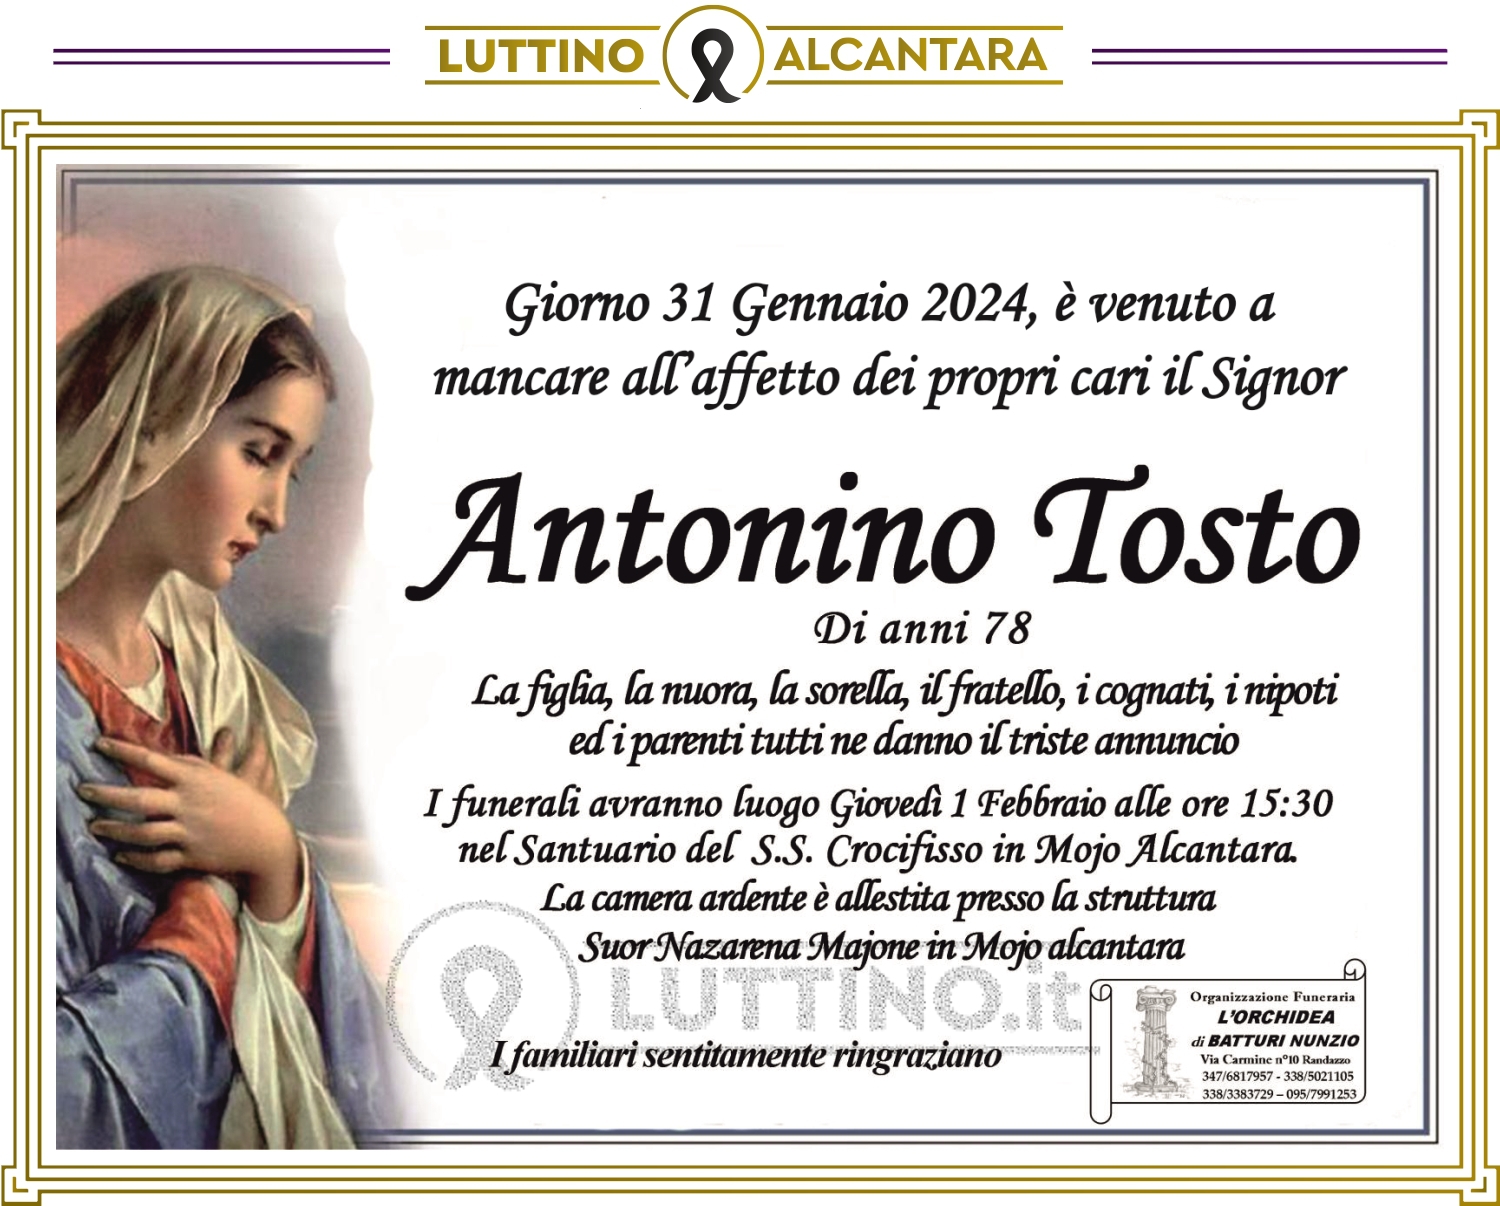 Antonino  Tosto